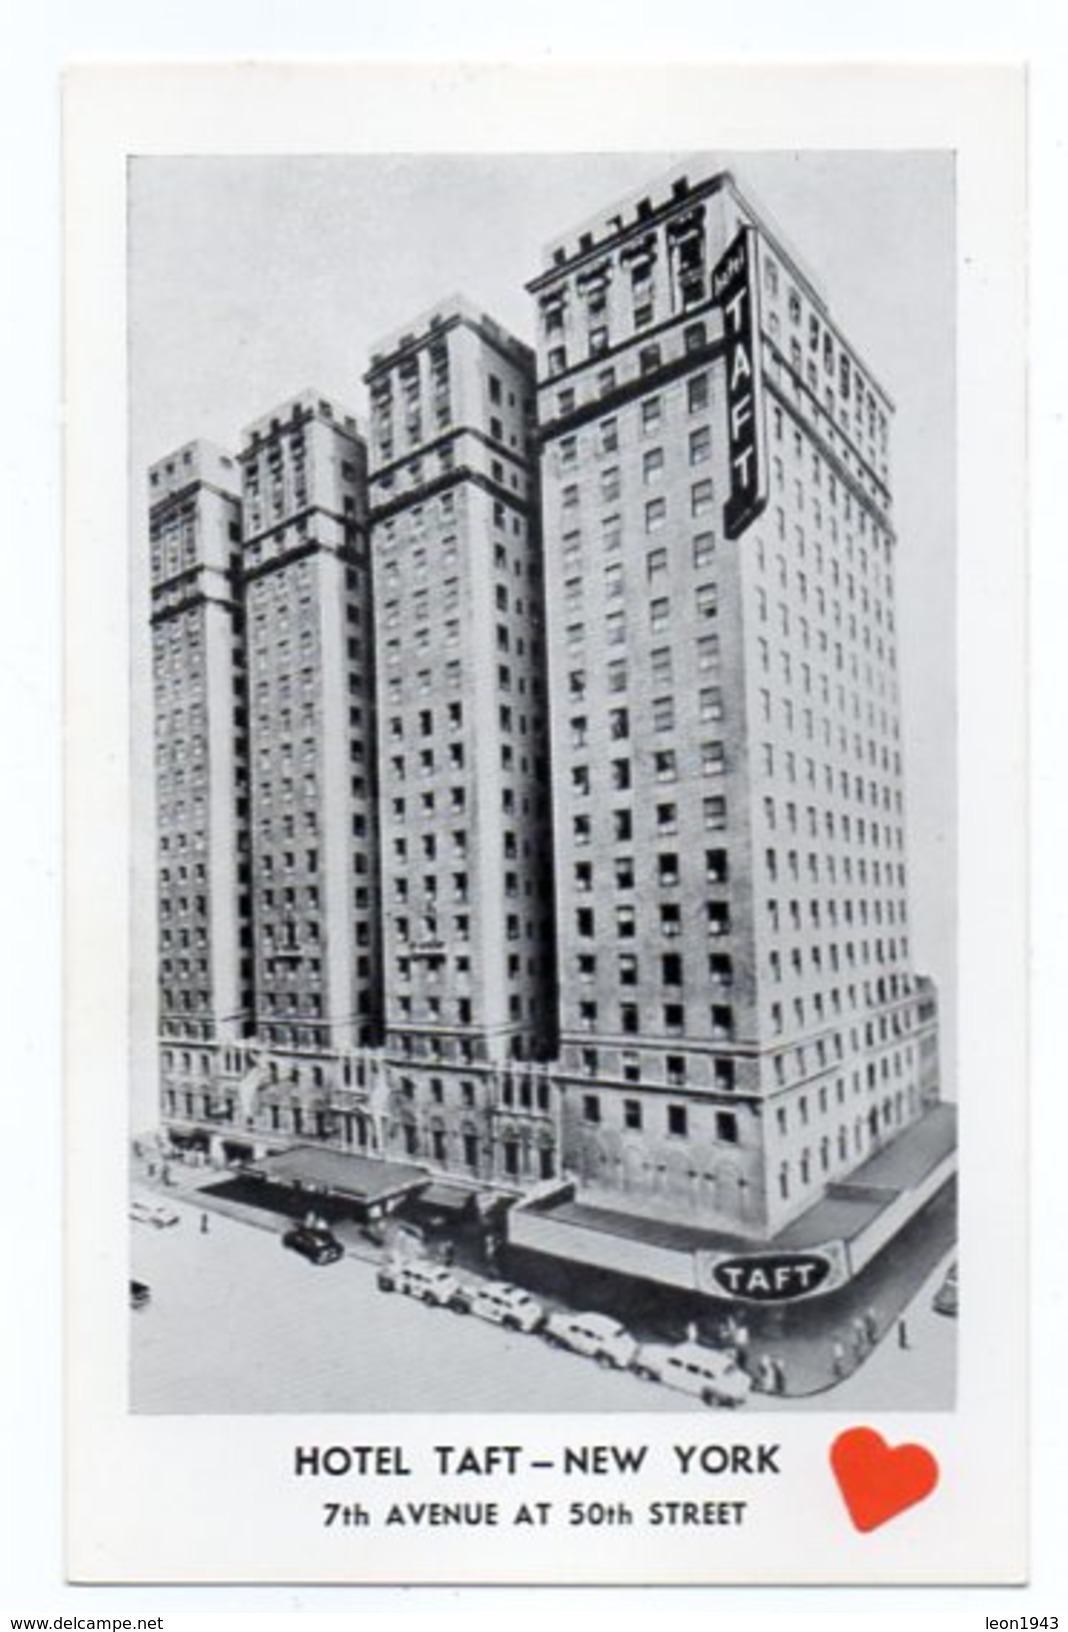 15556-LE-ETATS UNIS-HOTEL TAFT-NEW YORK-7th AVENUE AT 50th STREET--ON TIMES SQUARE AT RADIO CITY - Time Square